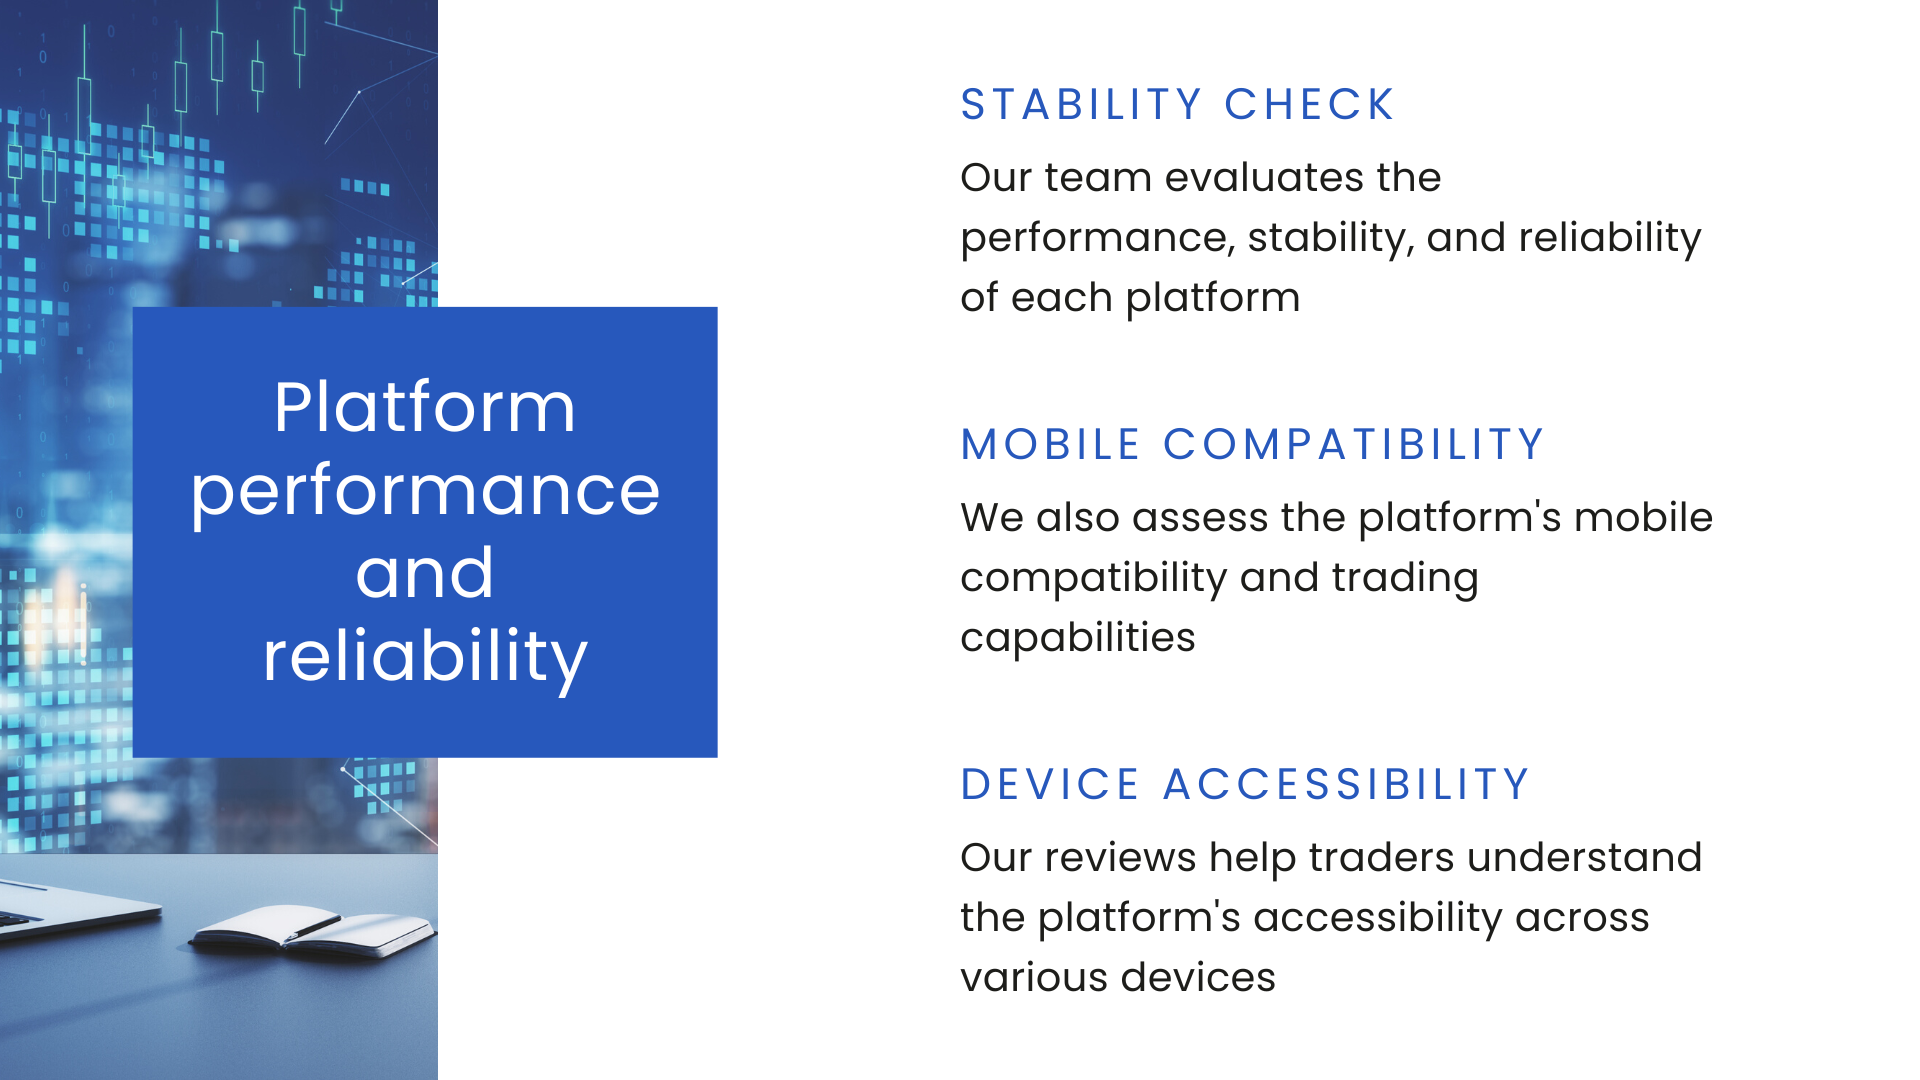 Platform performance and reliability